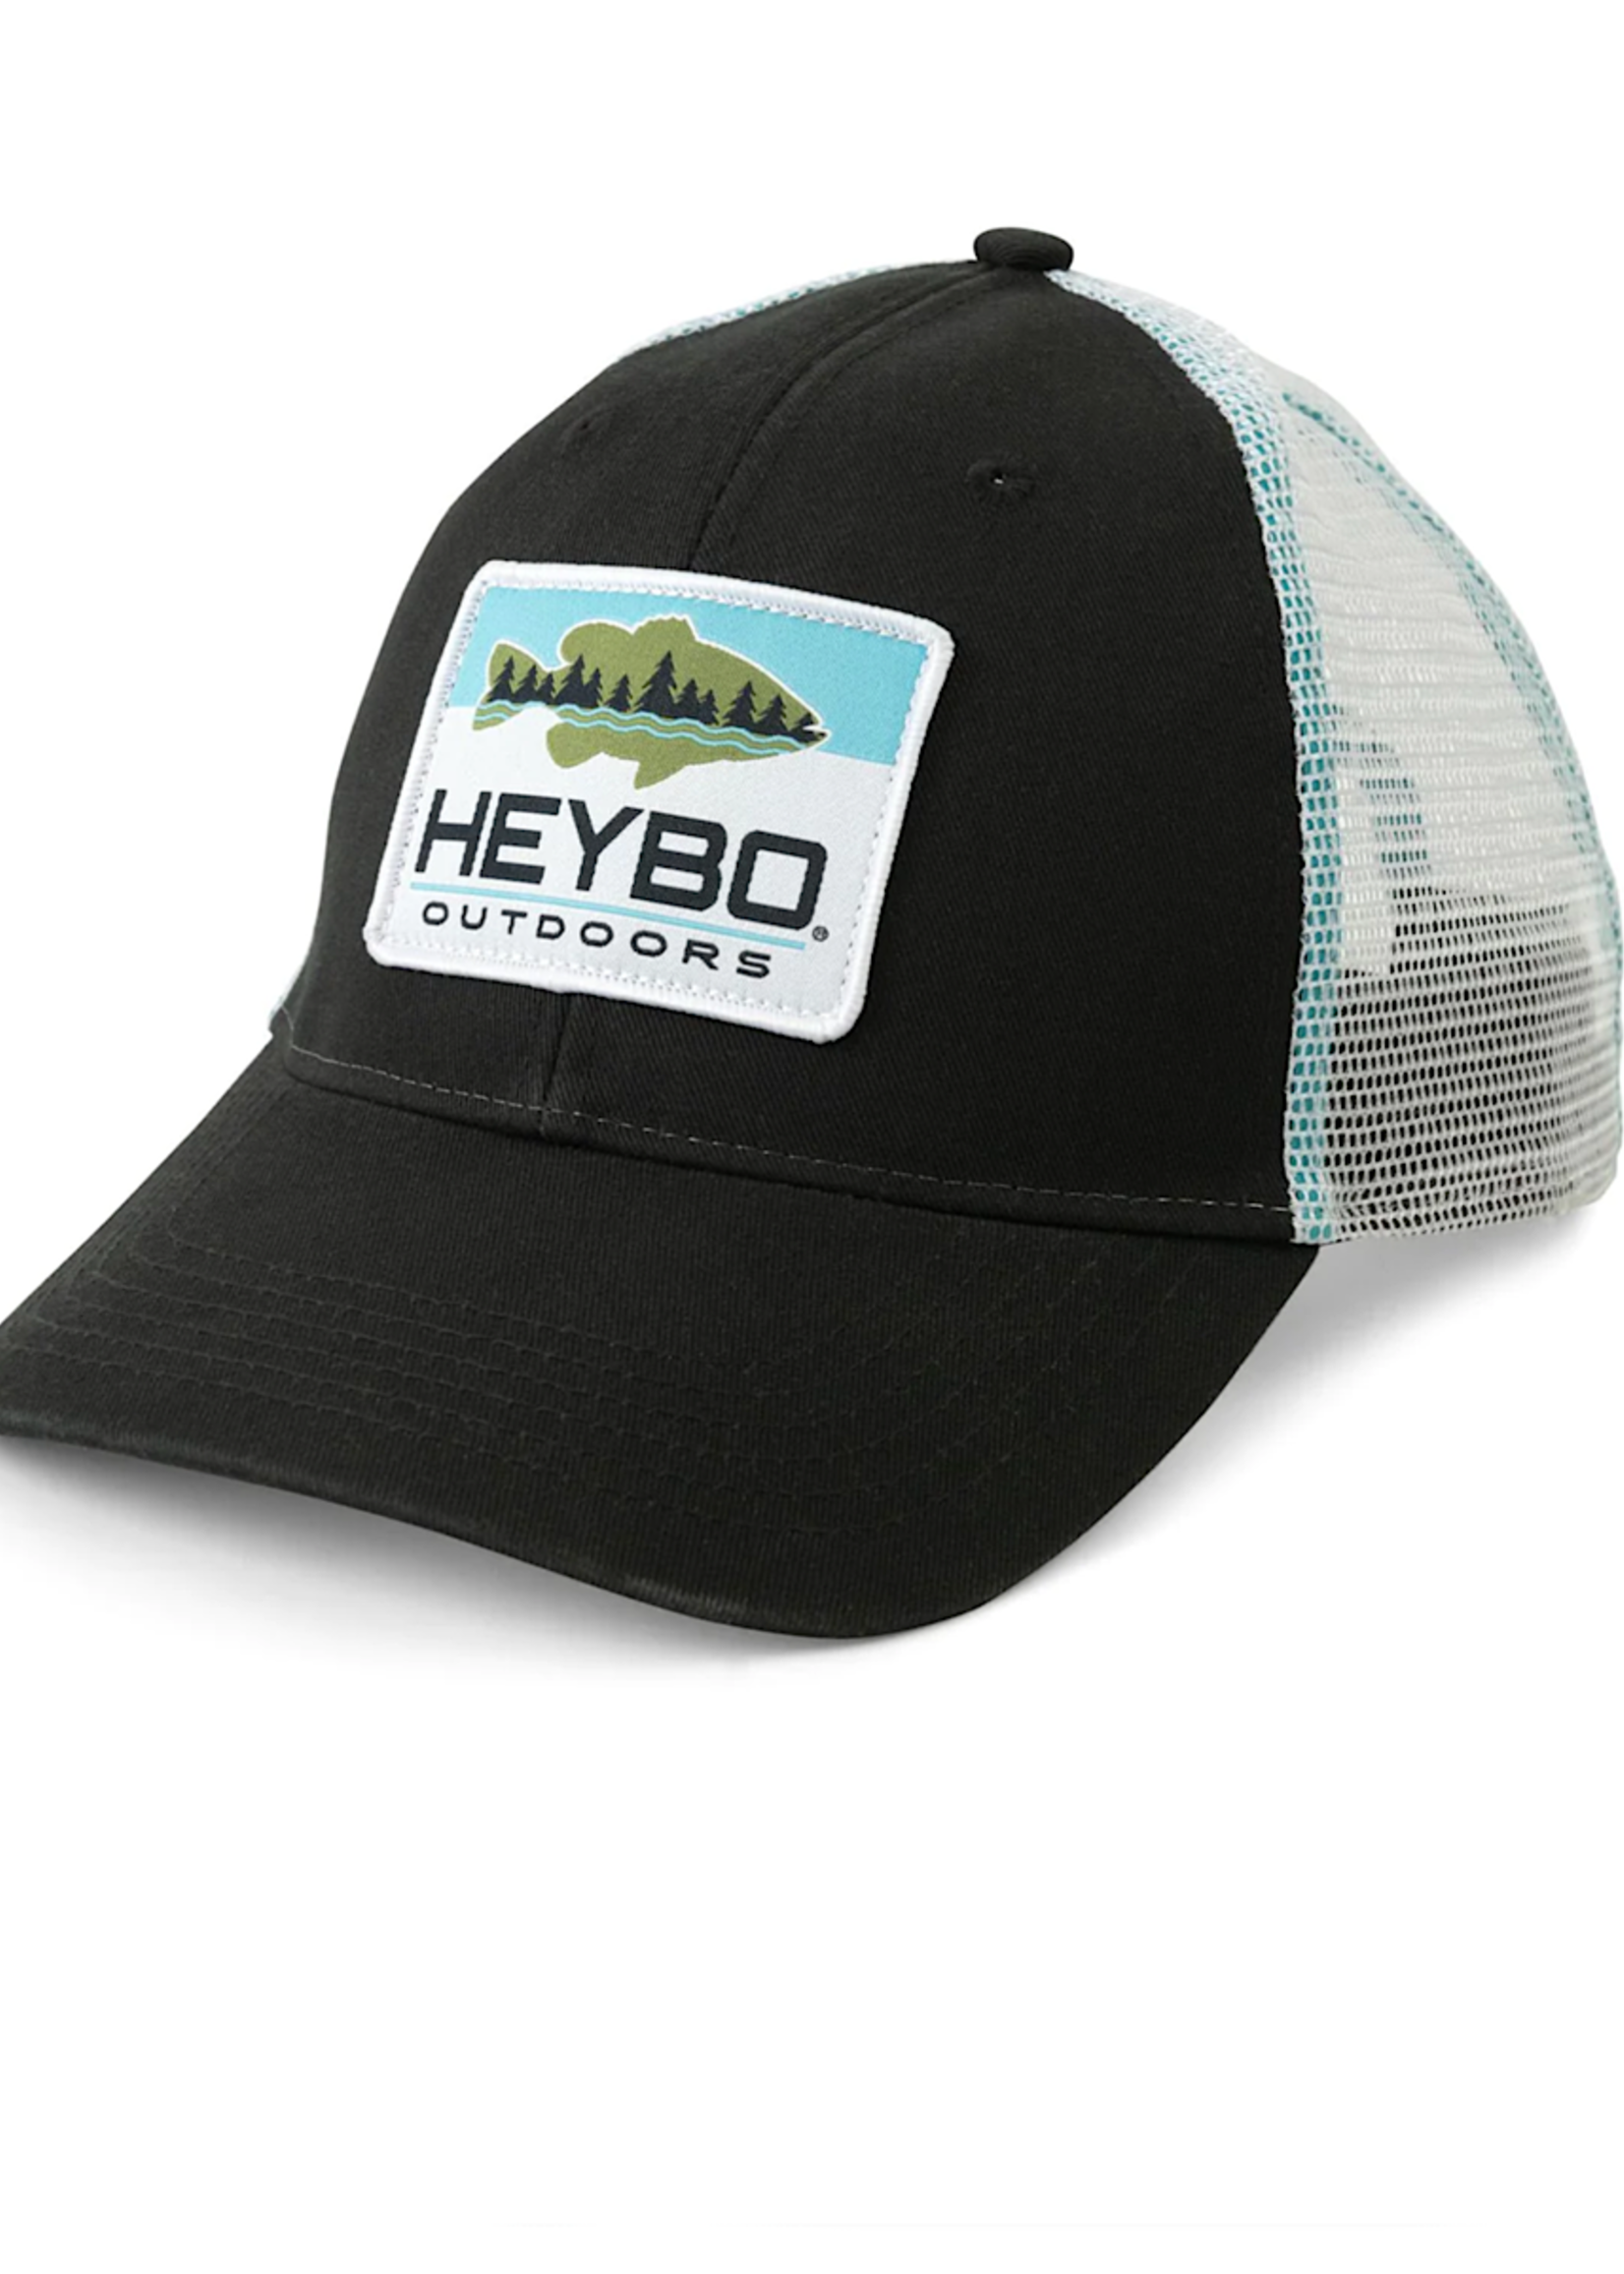 HEYBO Outdoors Heybo Men's Hats Waterline Bass Meshback Trucker Black OS